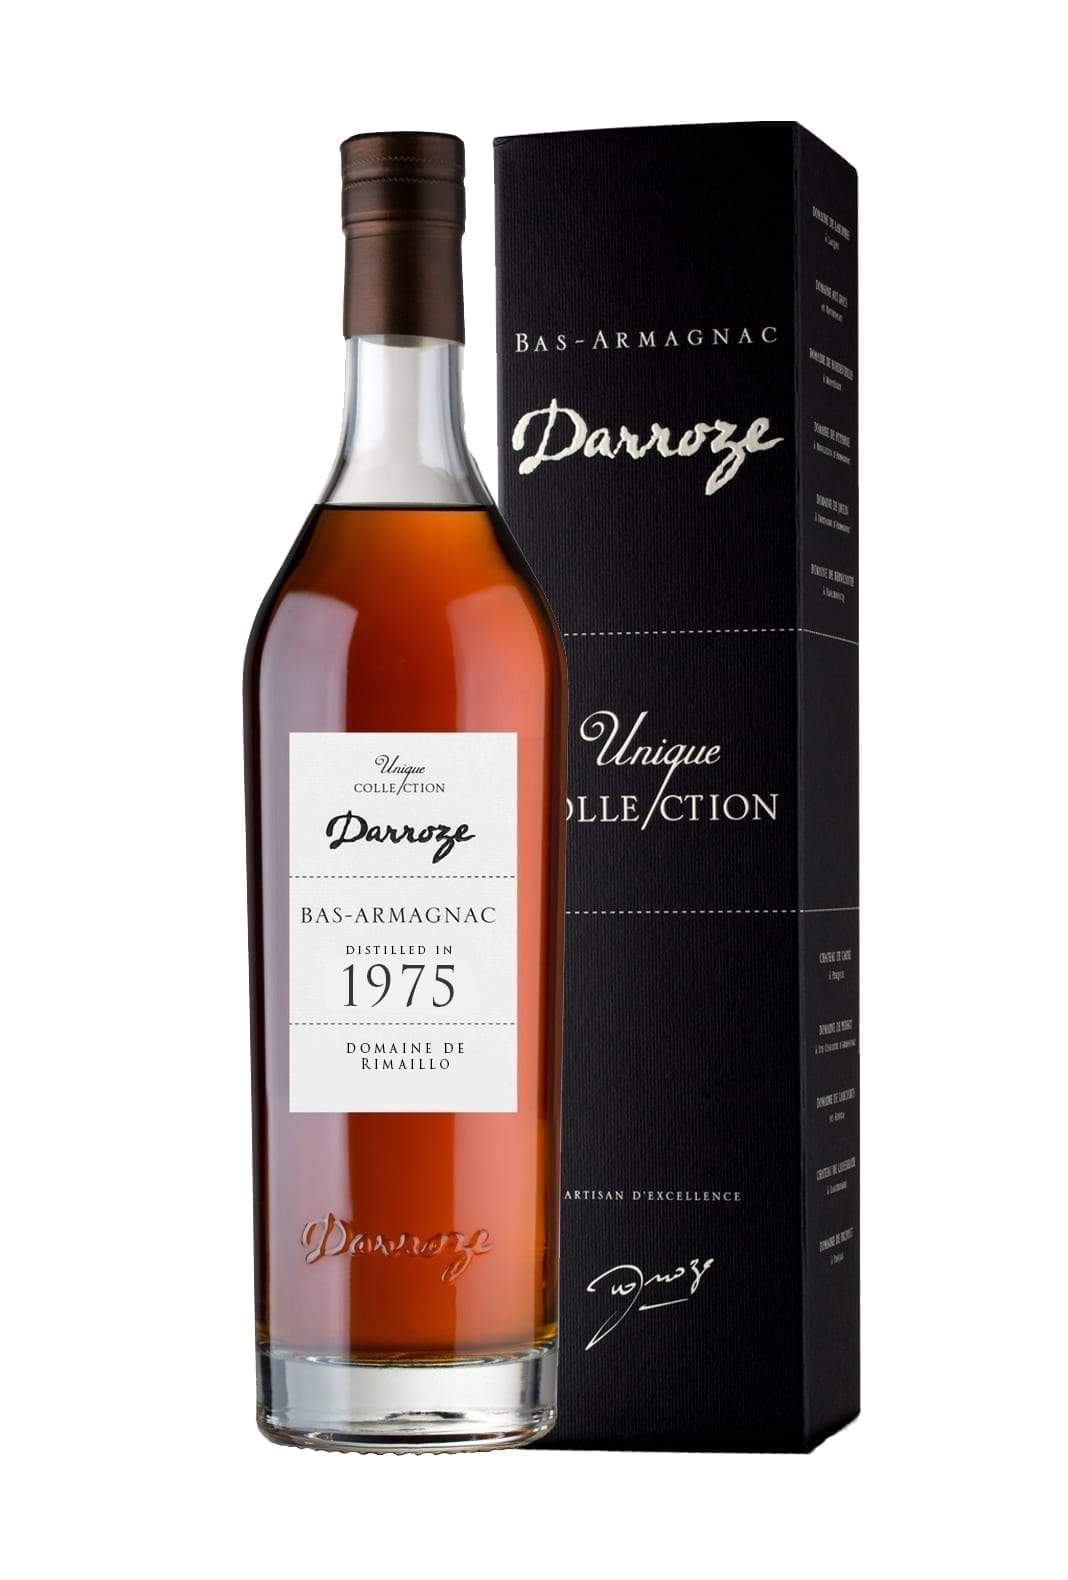 Darroze 1975 Rimaillo Armagnac 40.9% 700ml | Brandy | Shop online at Spirits of France